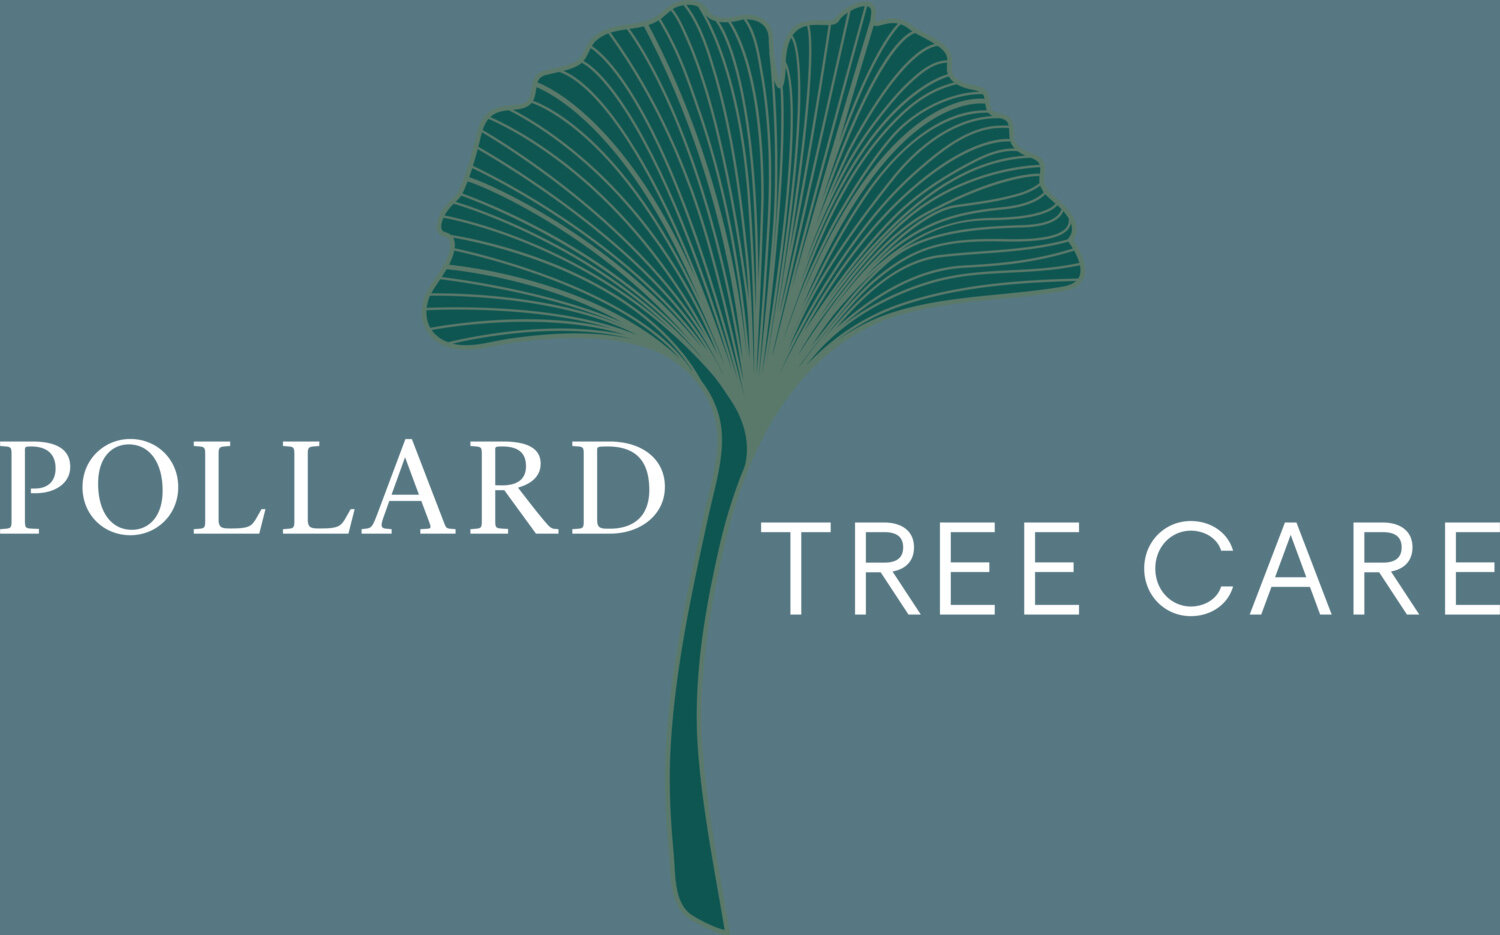 Pollard Tree Care